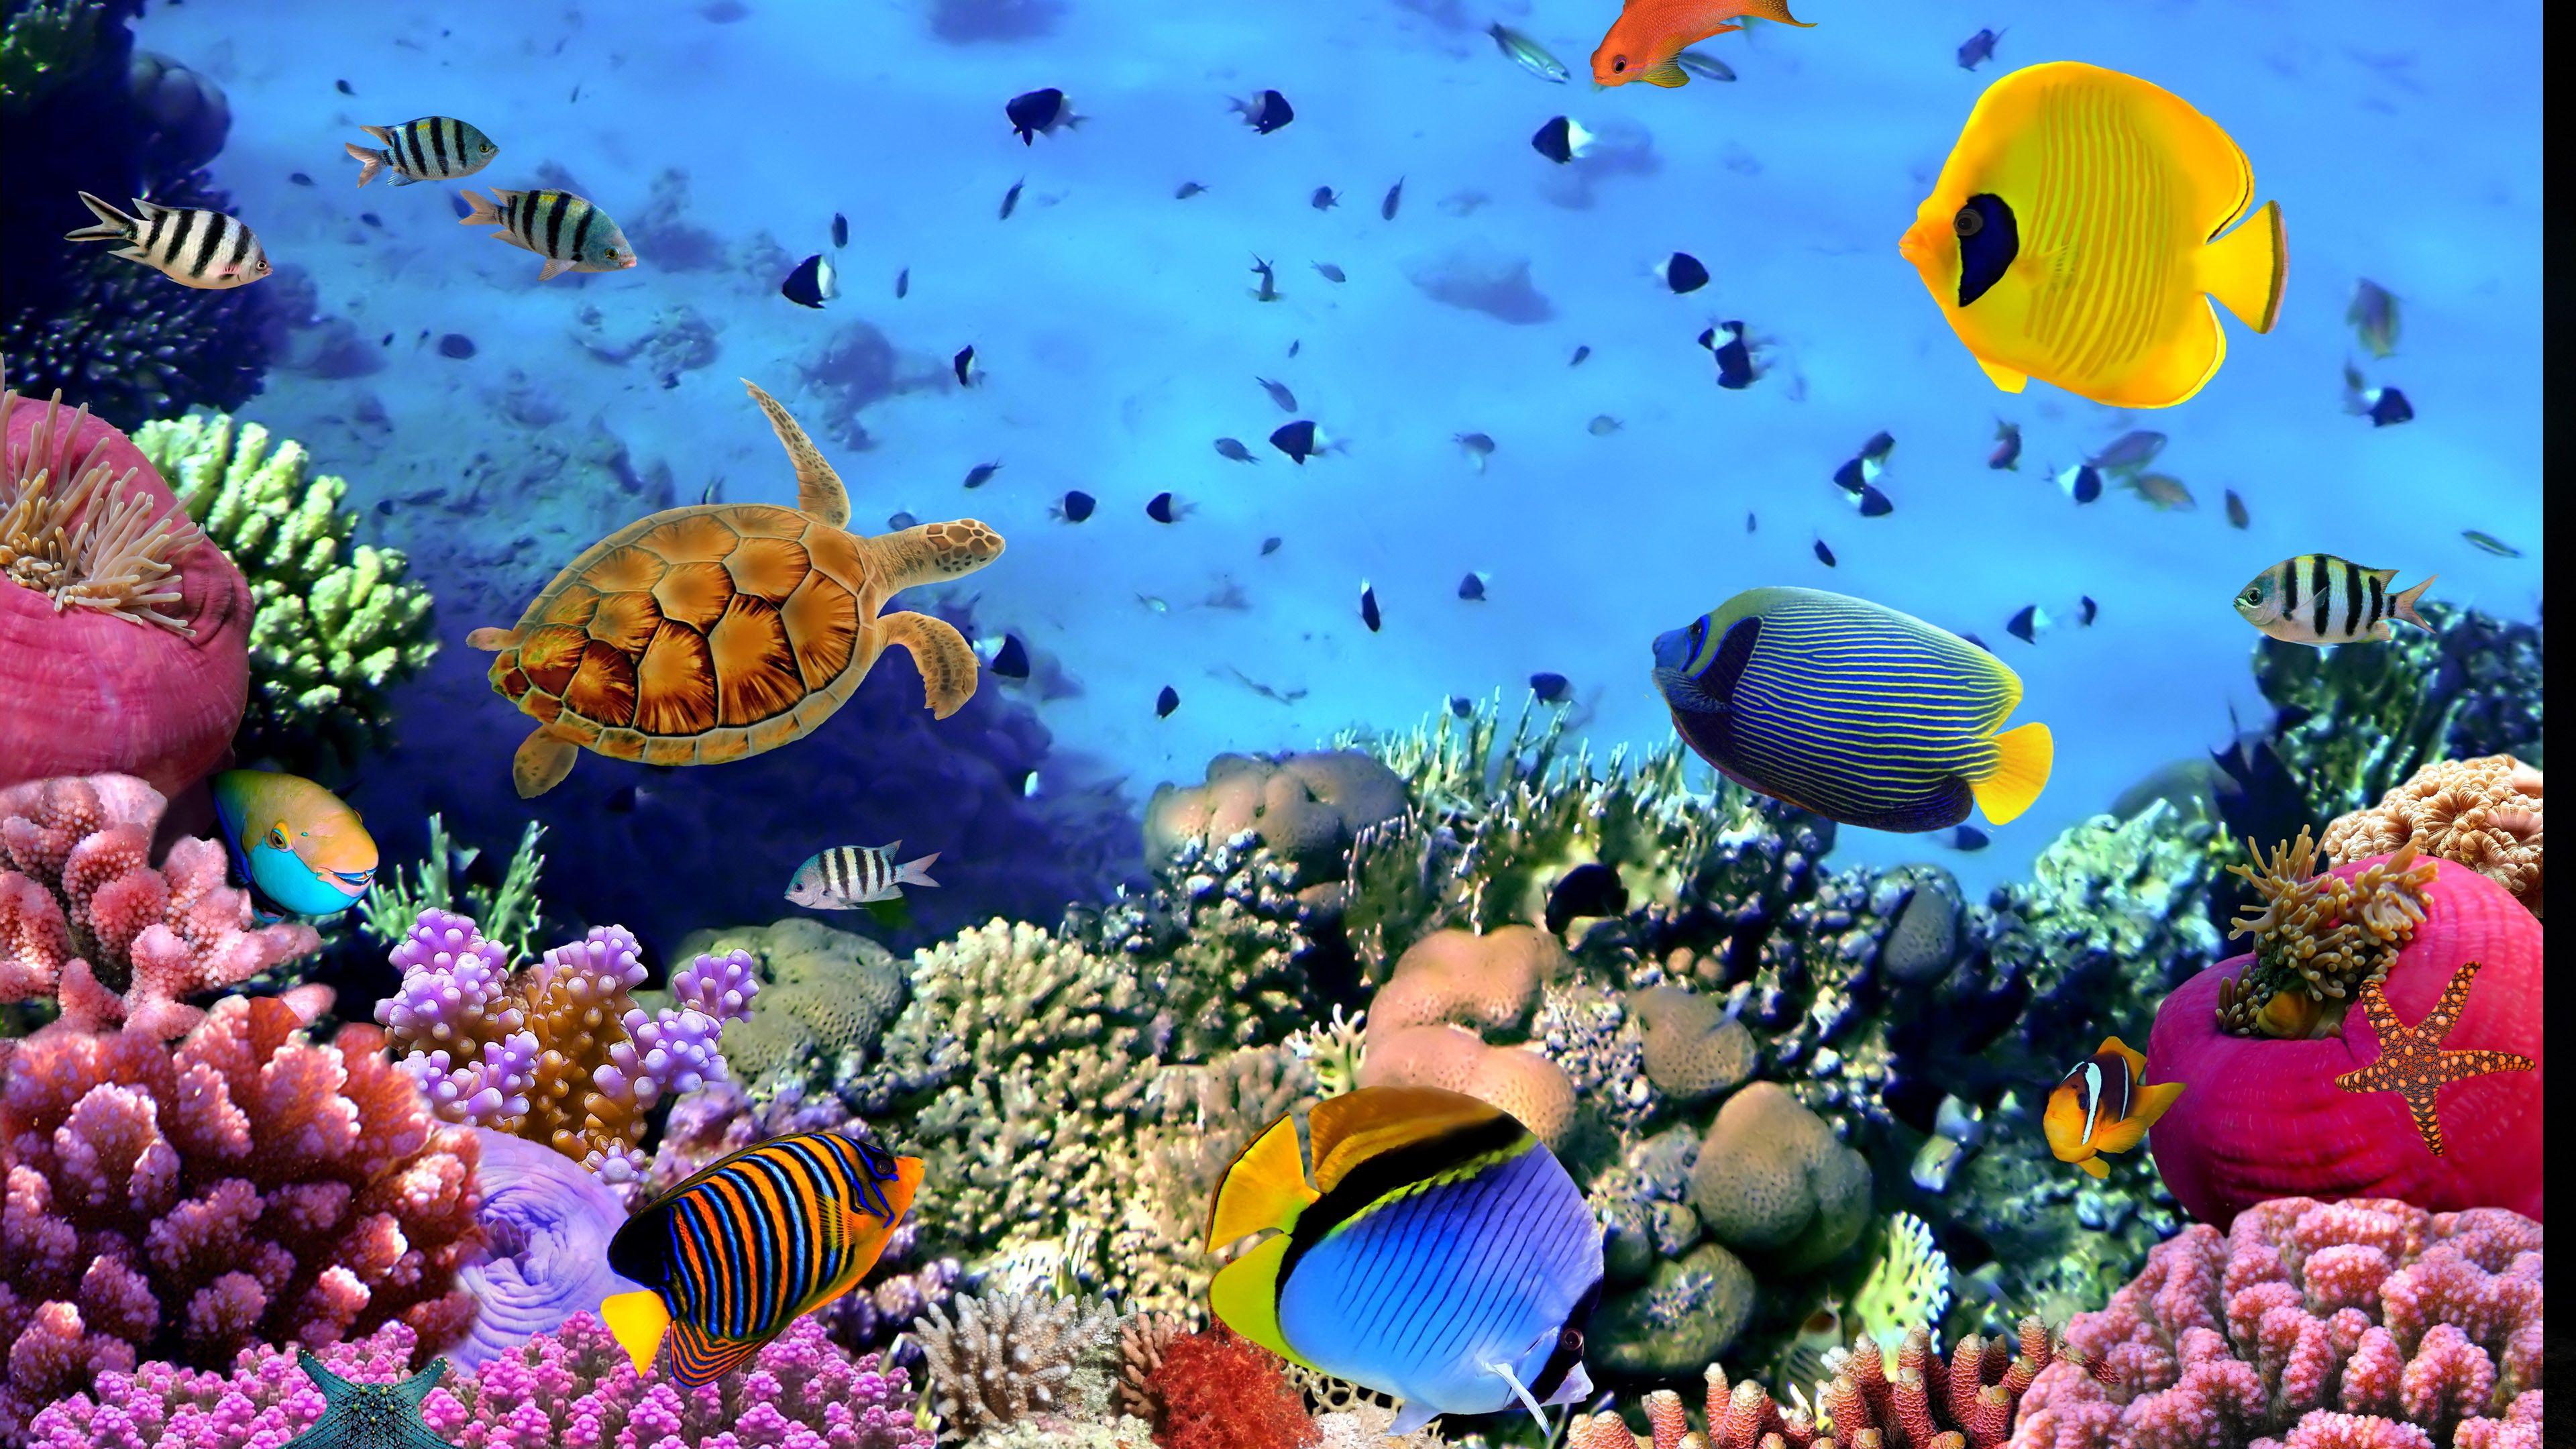 Aquarium 4K UHD Wallpapers - Top Free